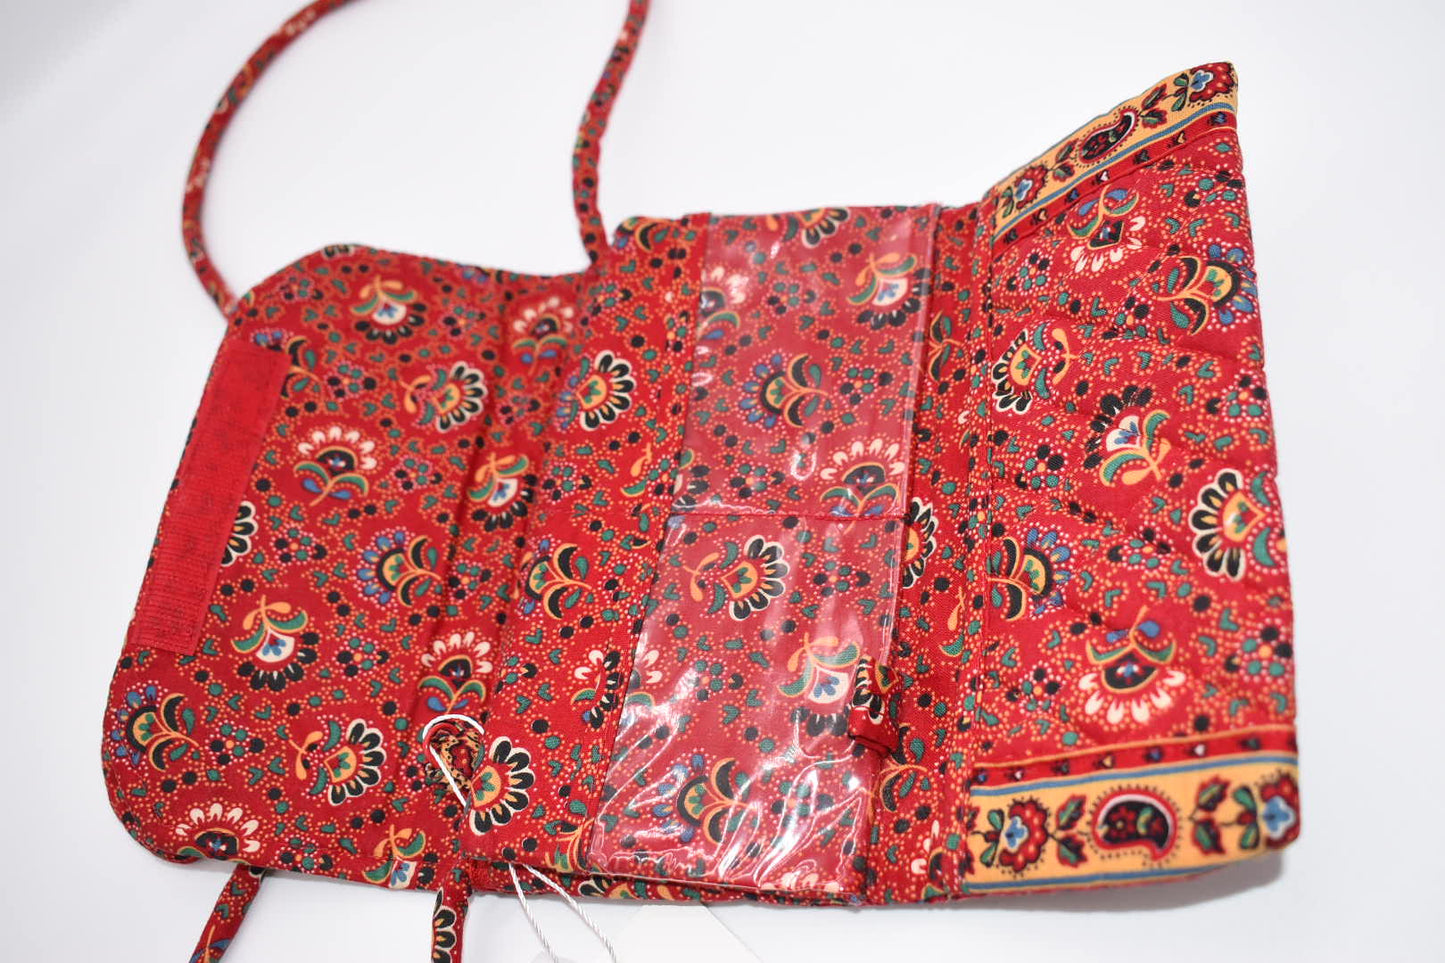 Vintage Vera Bradley Strap Wallet/ Crossbody in "Colette Red" Pattern